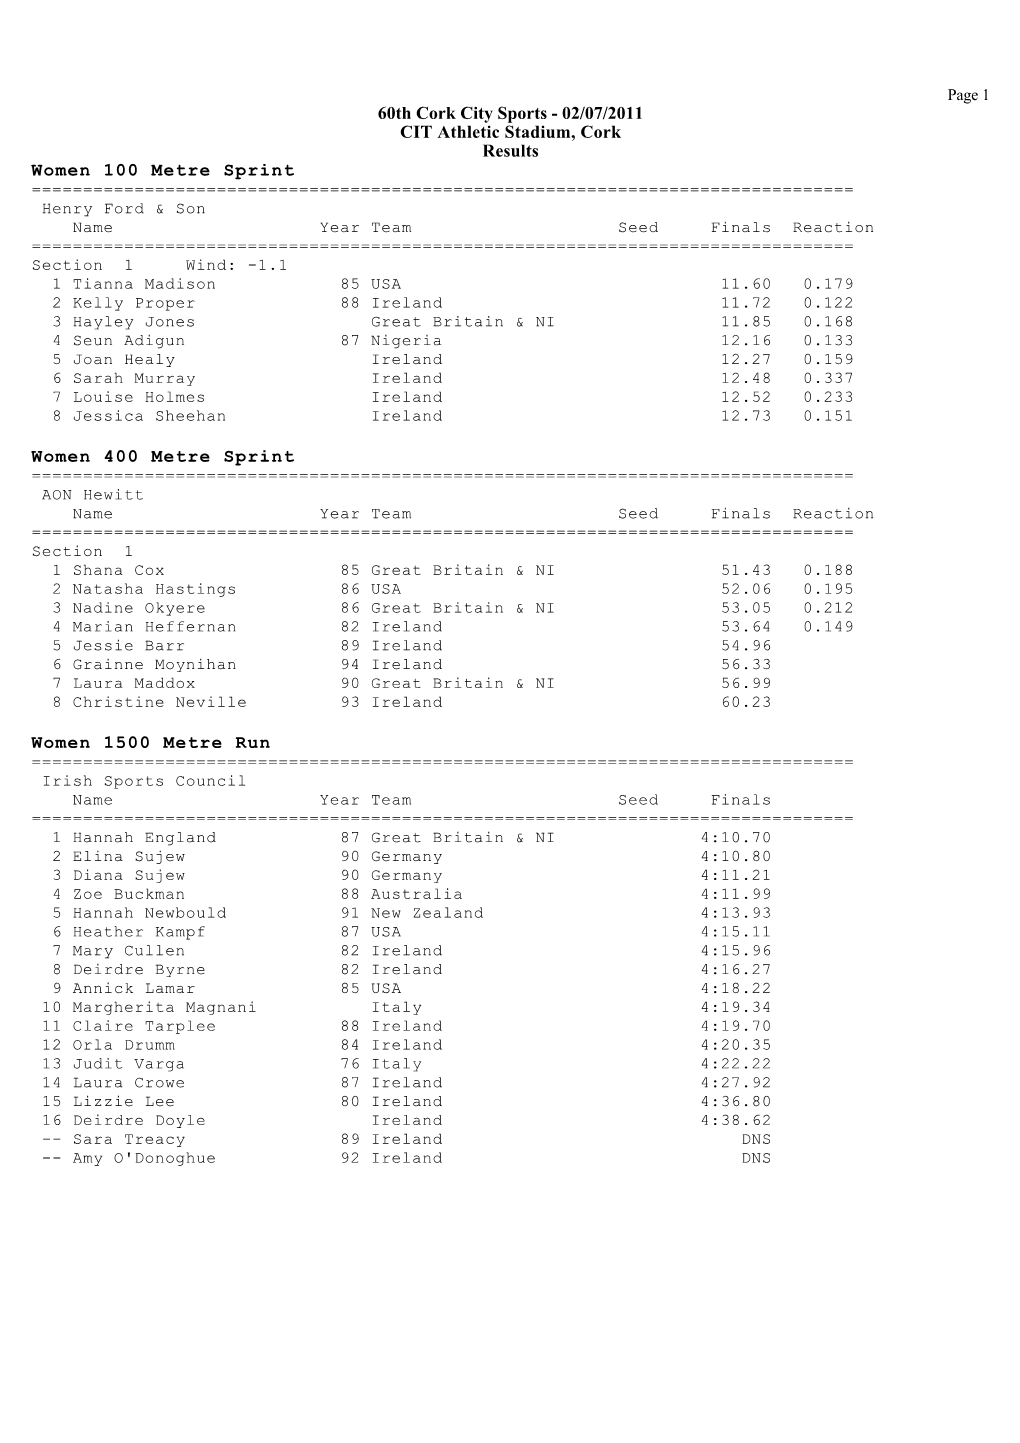 02/07/2011 CIT Athletic Stadium, Cork Results Women 100 Metre Sprint Women 400 Metre Sprint Women 1500 M